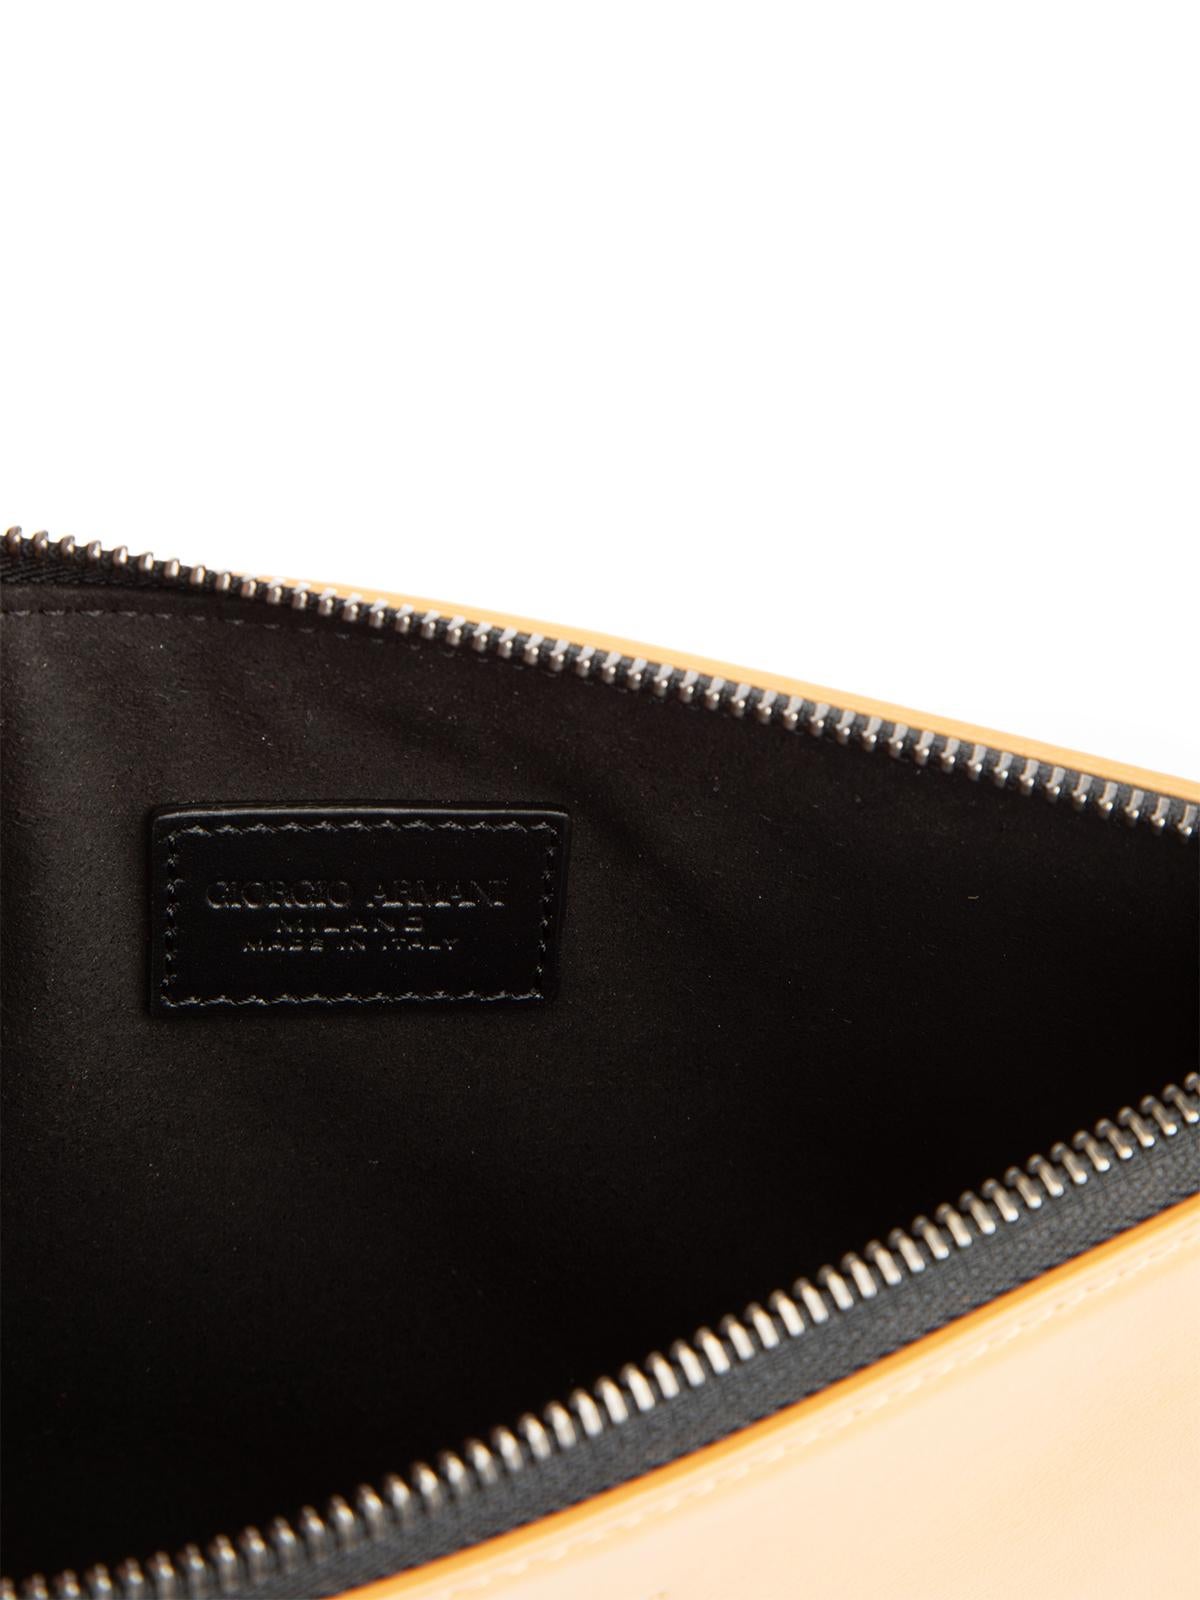 Pre-Loved Giorgio Armani Prive Women's Leather Clutch Bag In Excellent Condition In London, GB